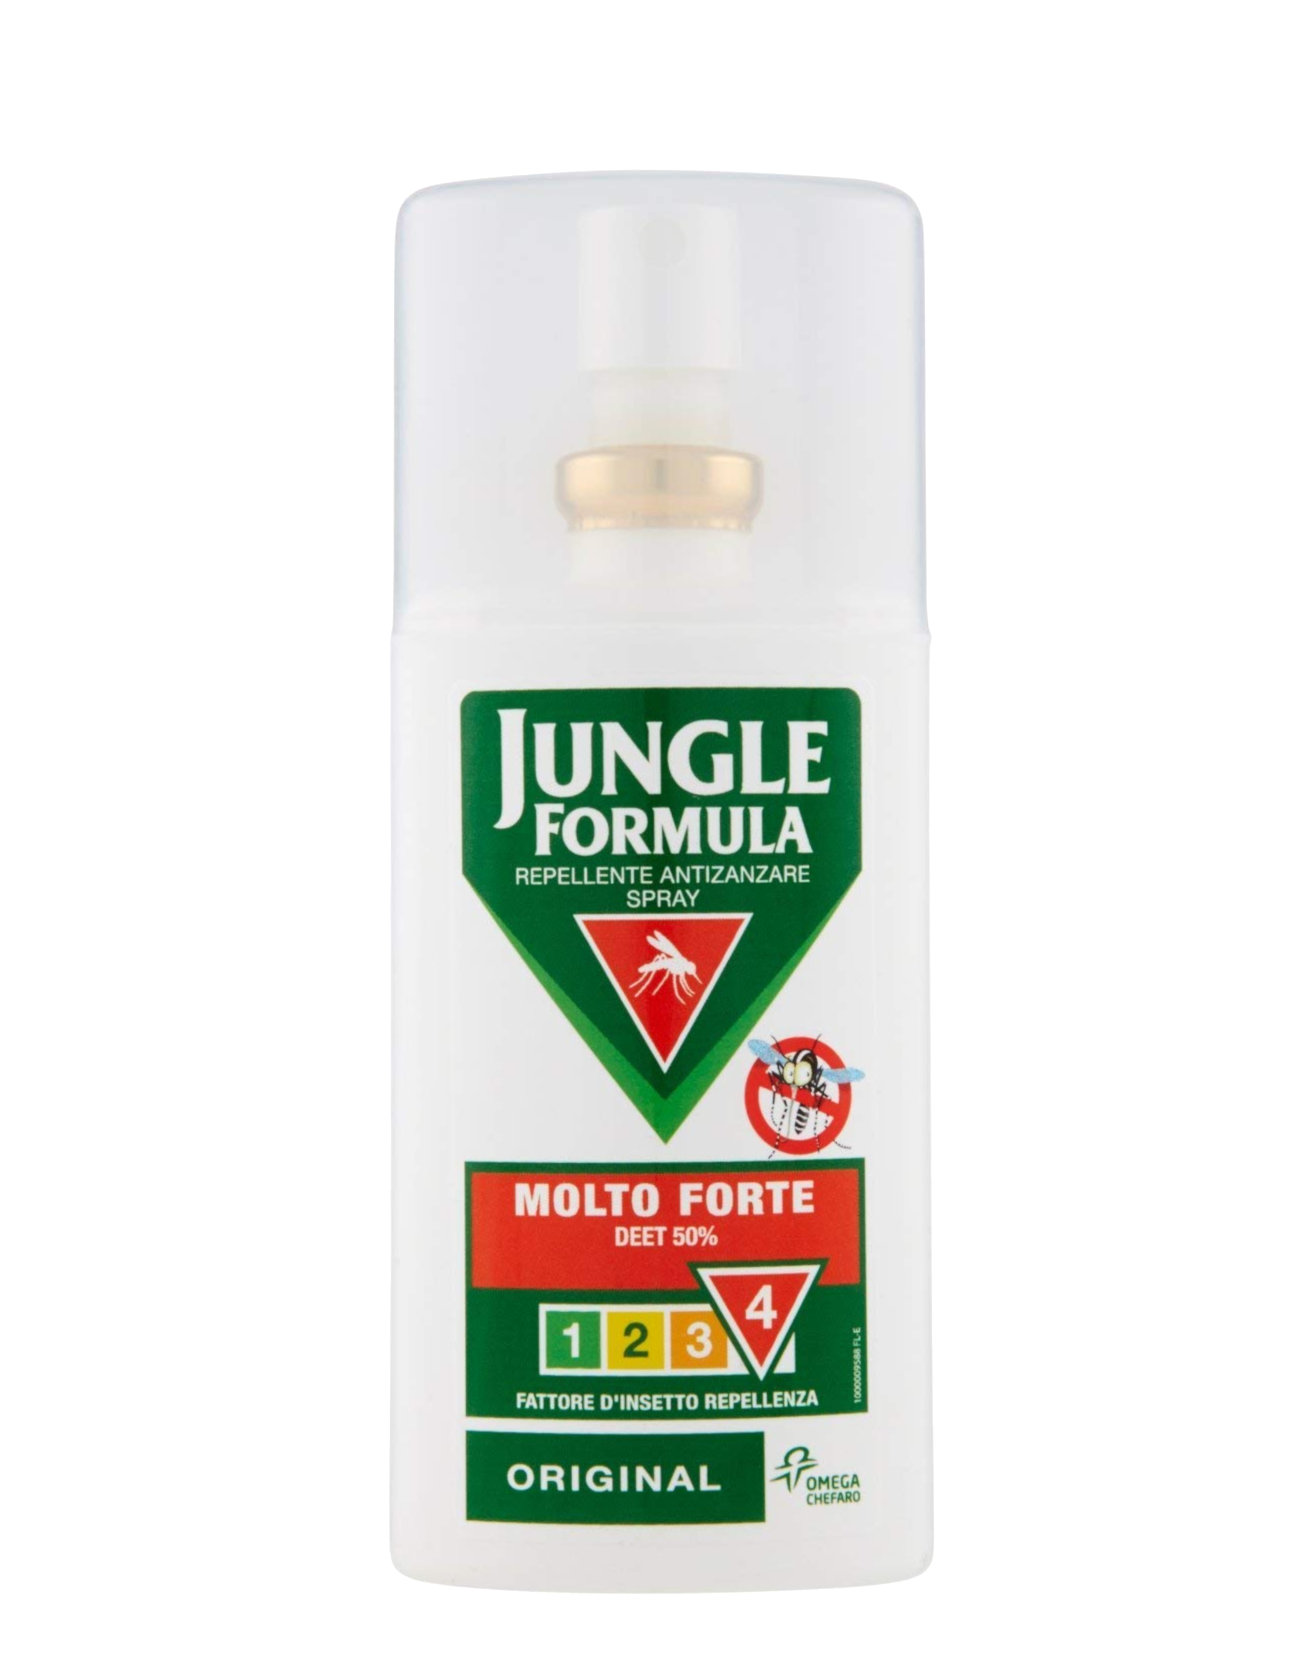 Molto Forte Spray Original von Jungle formula, 75ml 